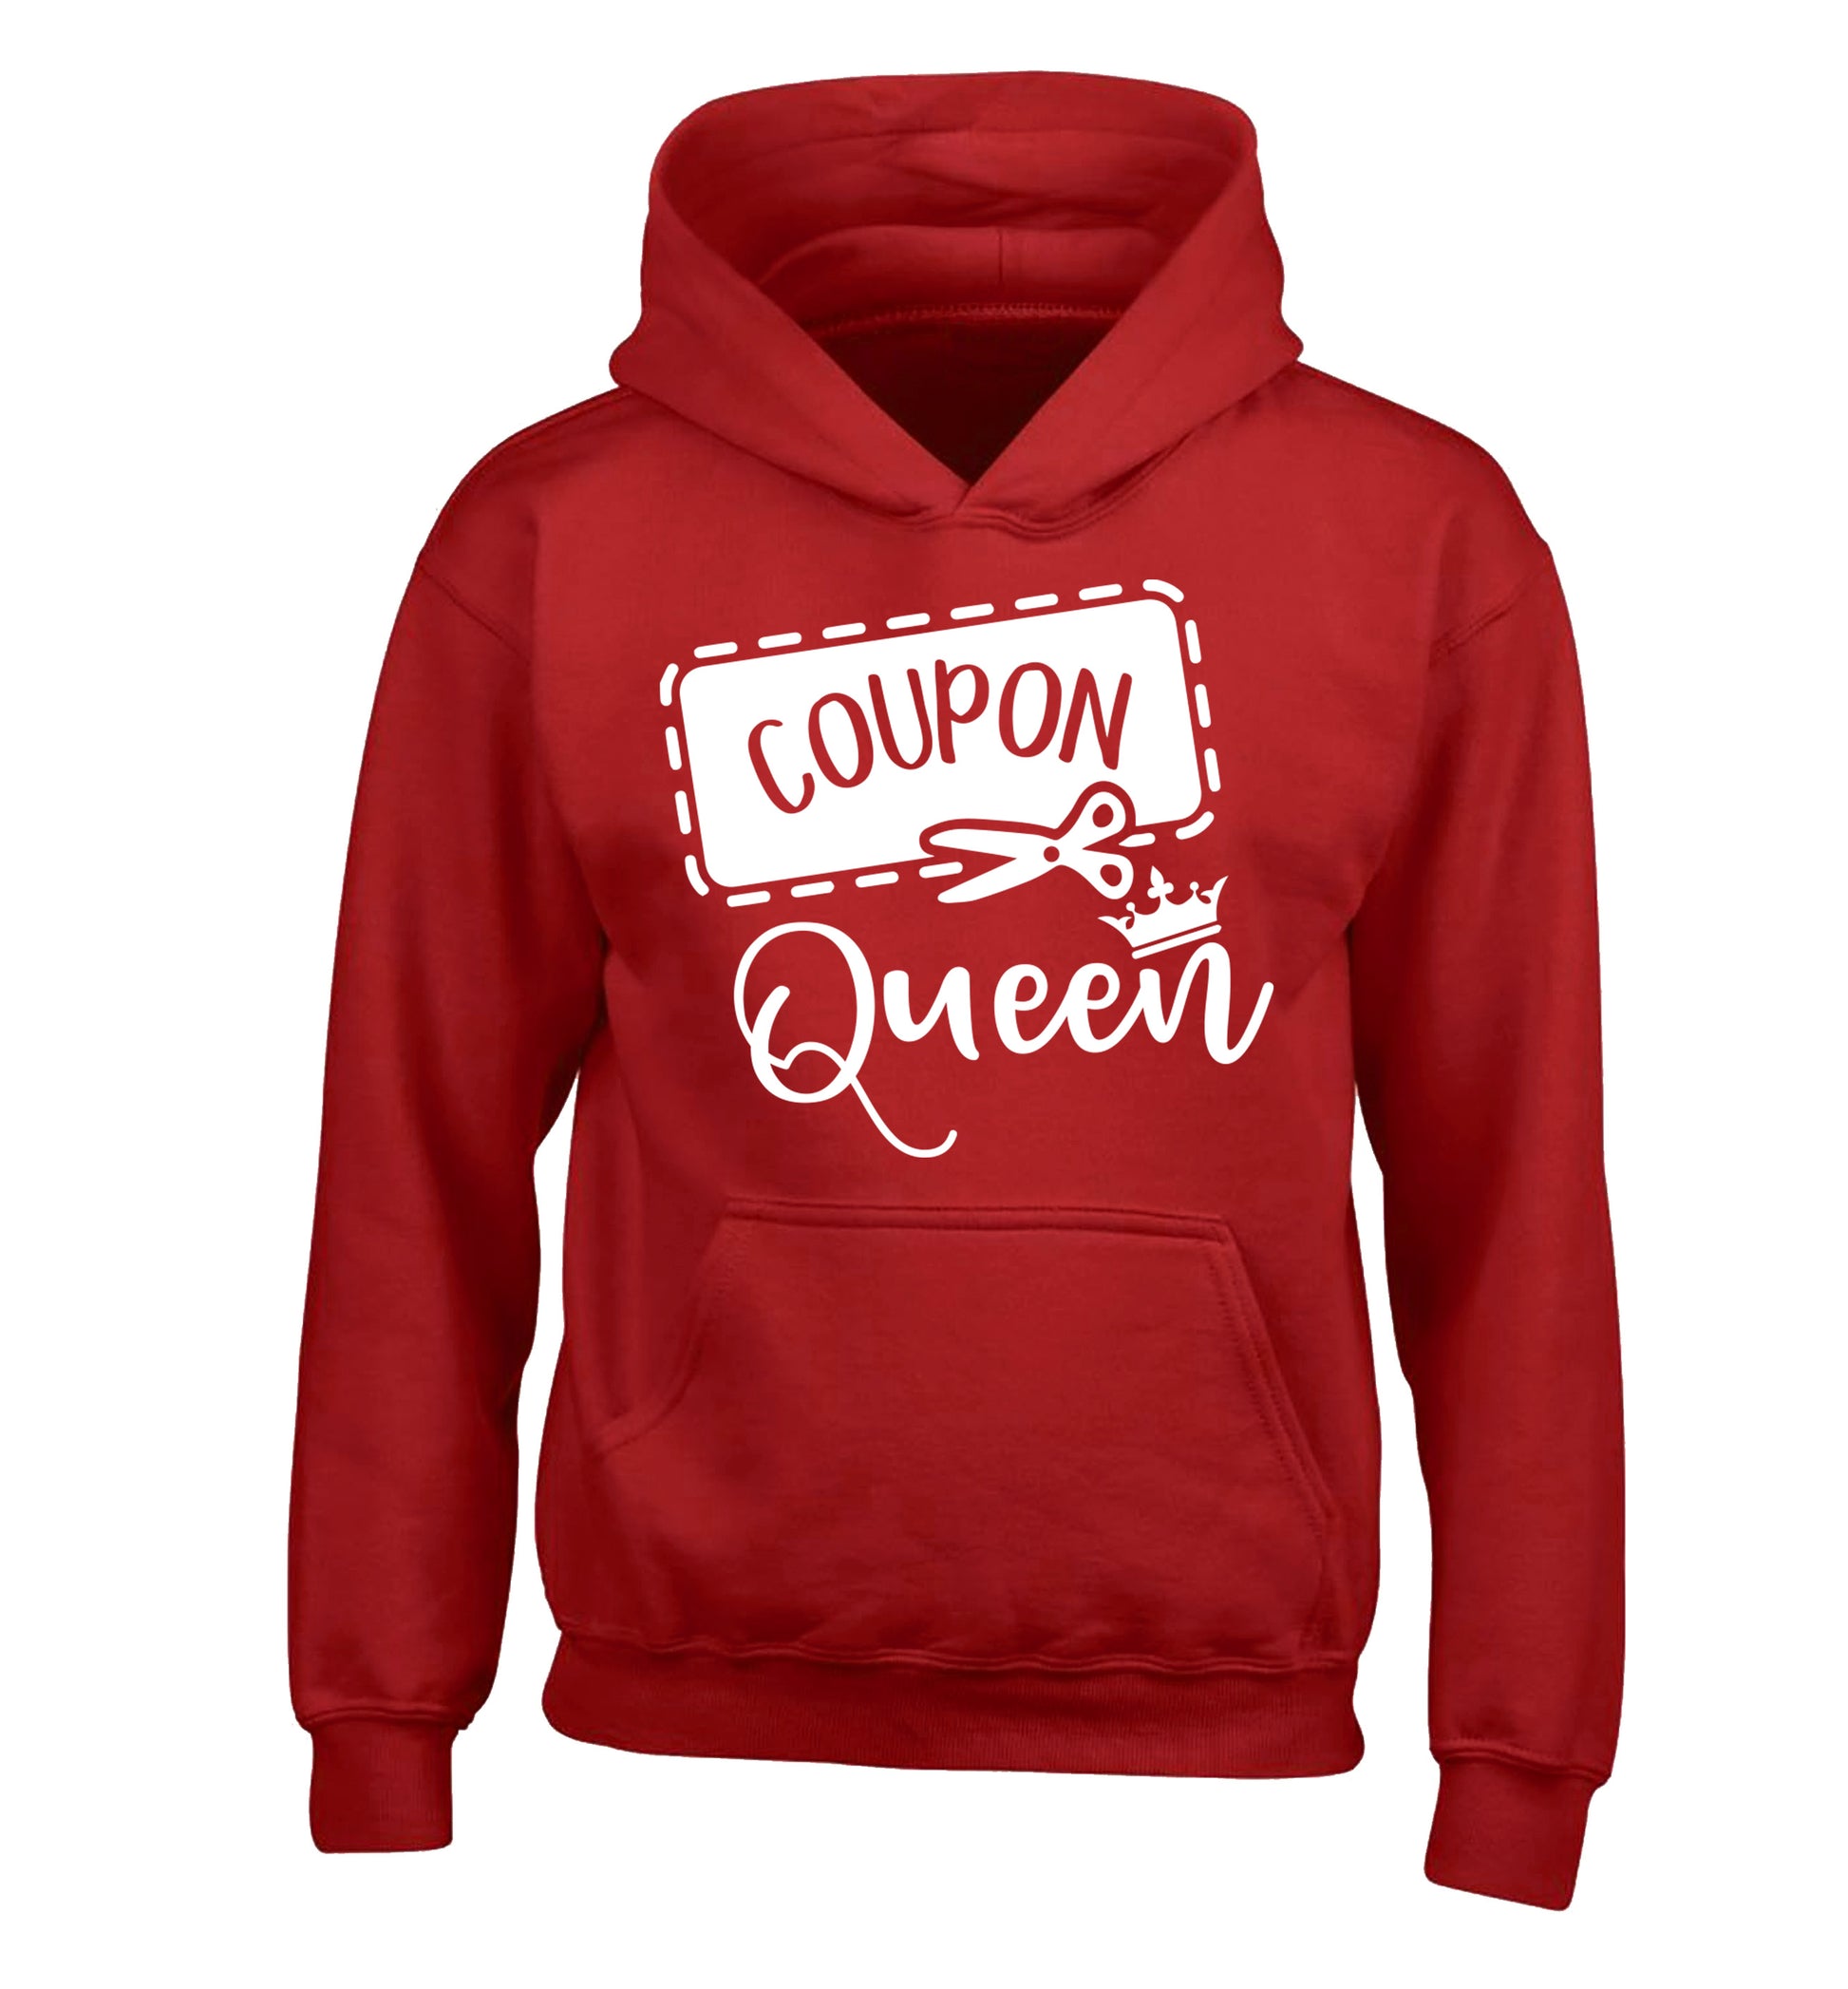 Coupon Queen children's red hoodie 12-13 Years